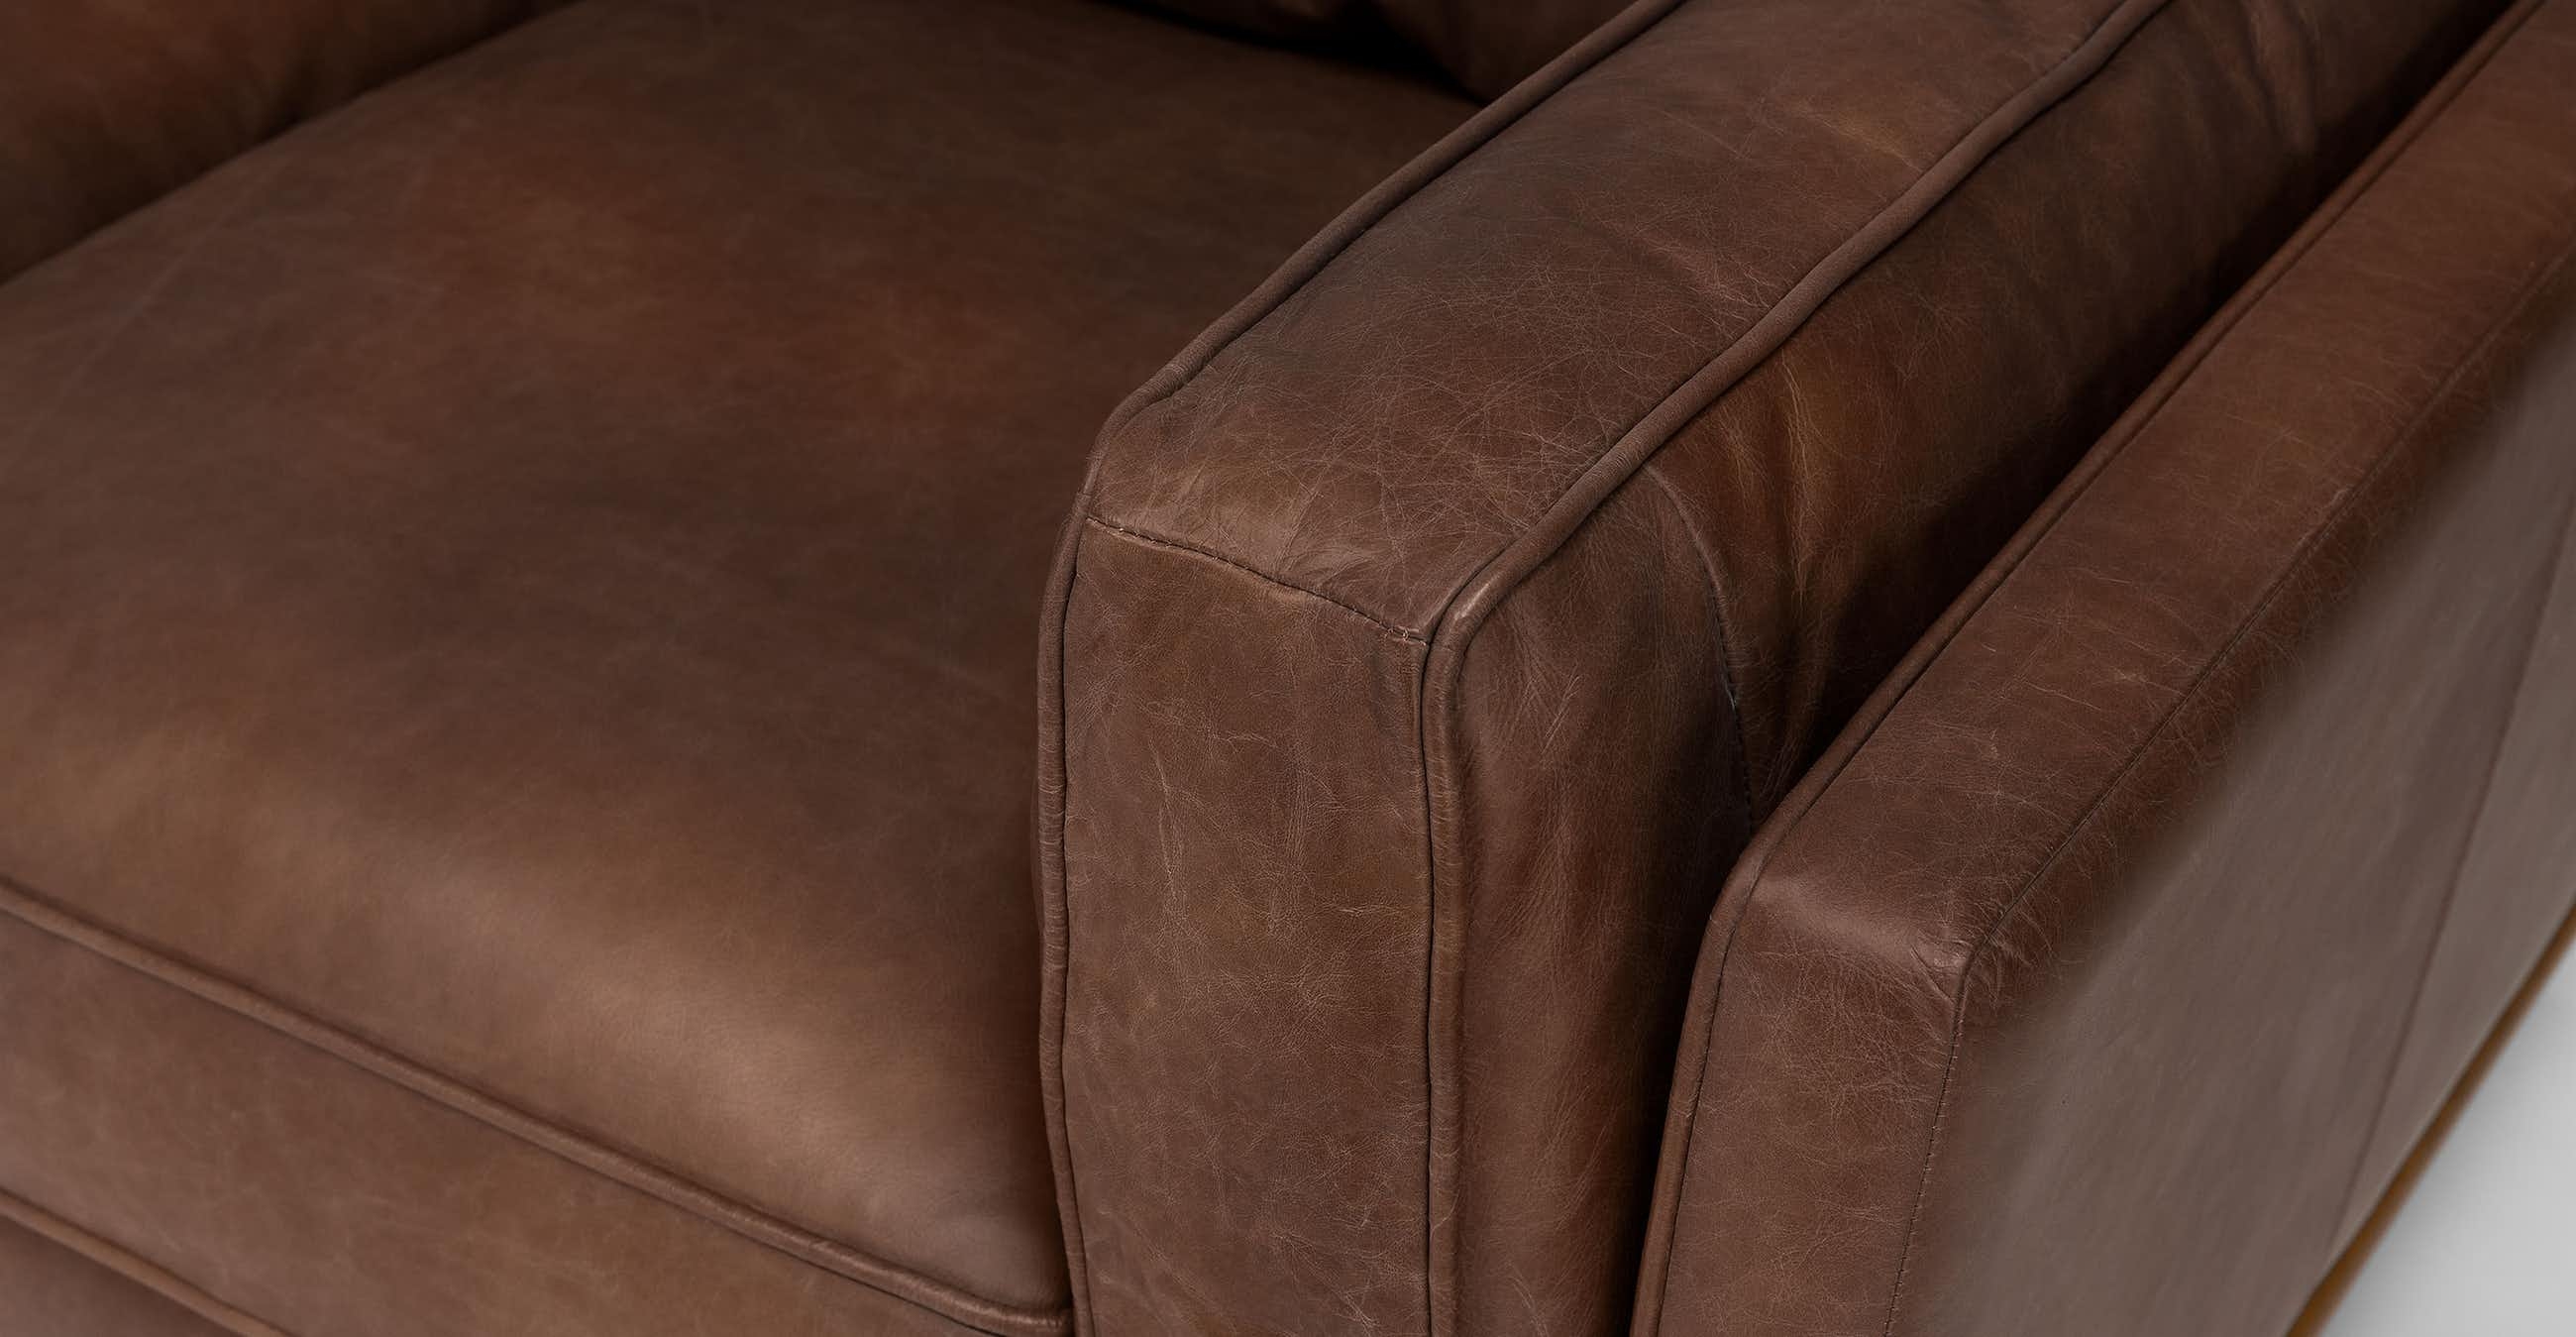 Timber 90" Leather Sofa - Charme Chocolat - Image 4